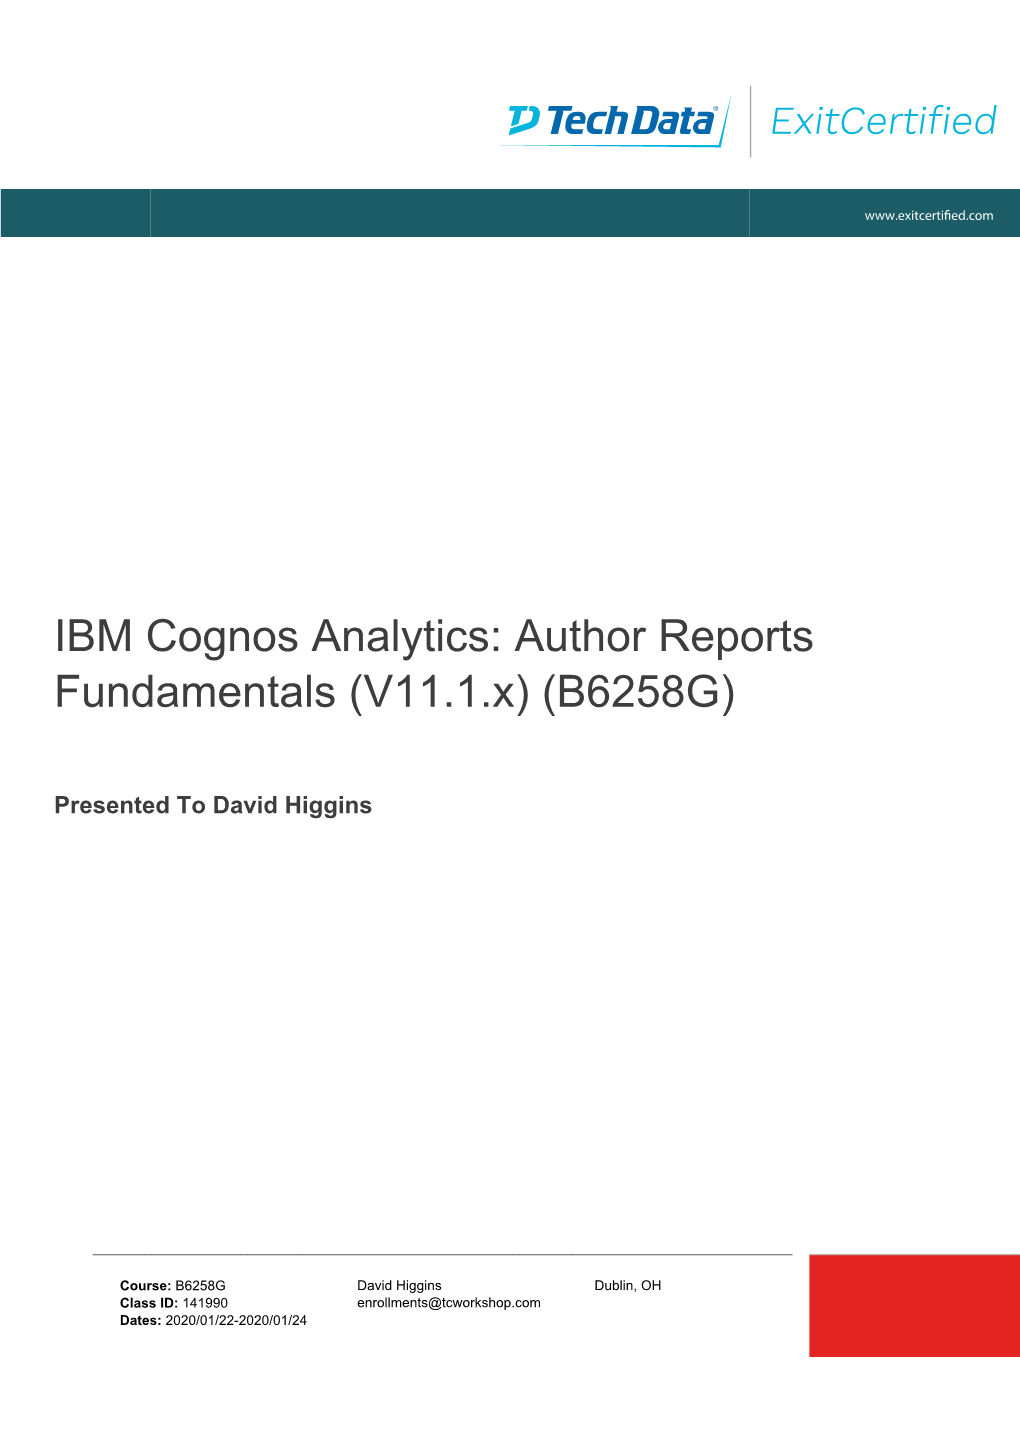 IBM Cognos Analytics: Author Reports Fundamentals (V11.1.X) (B6258G)